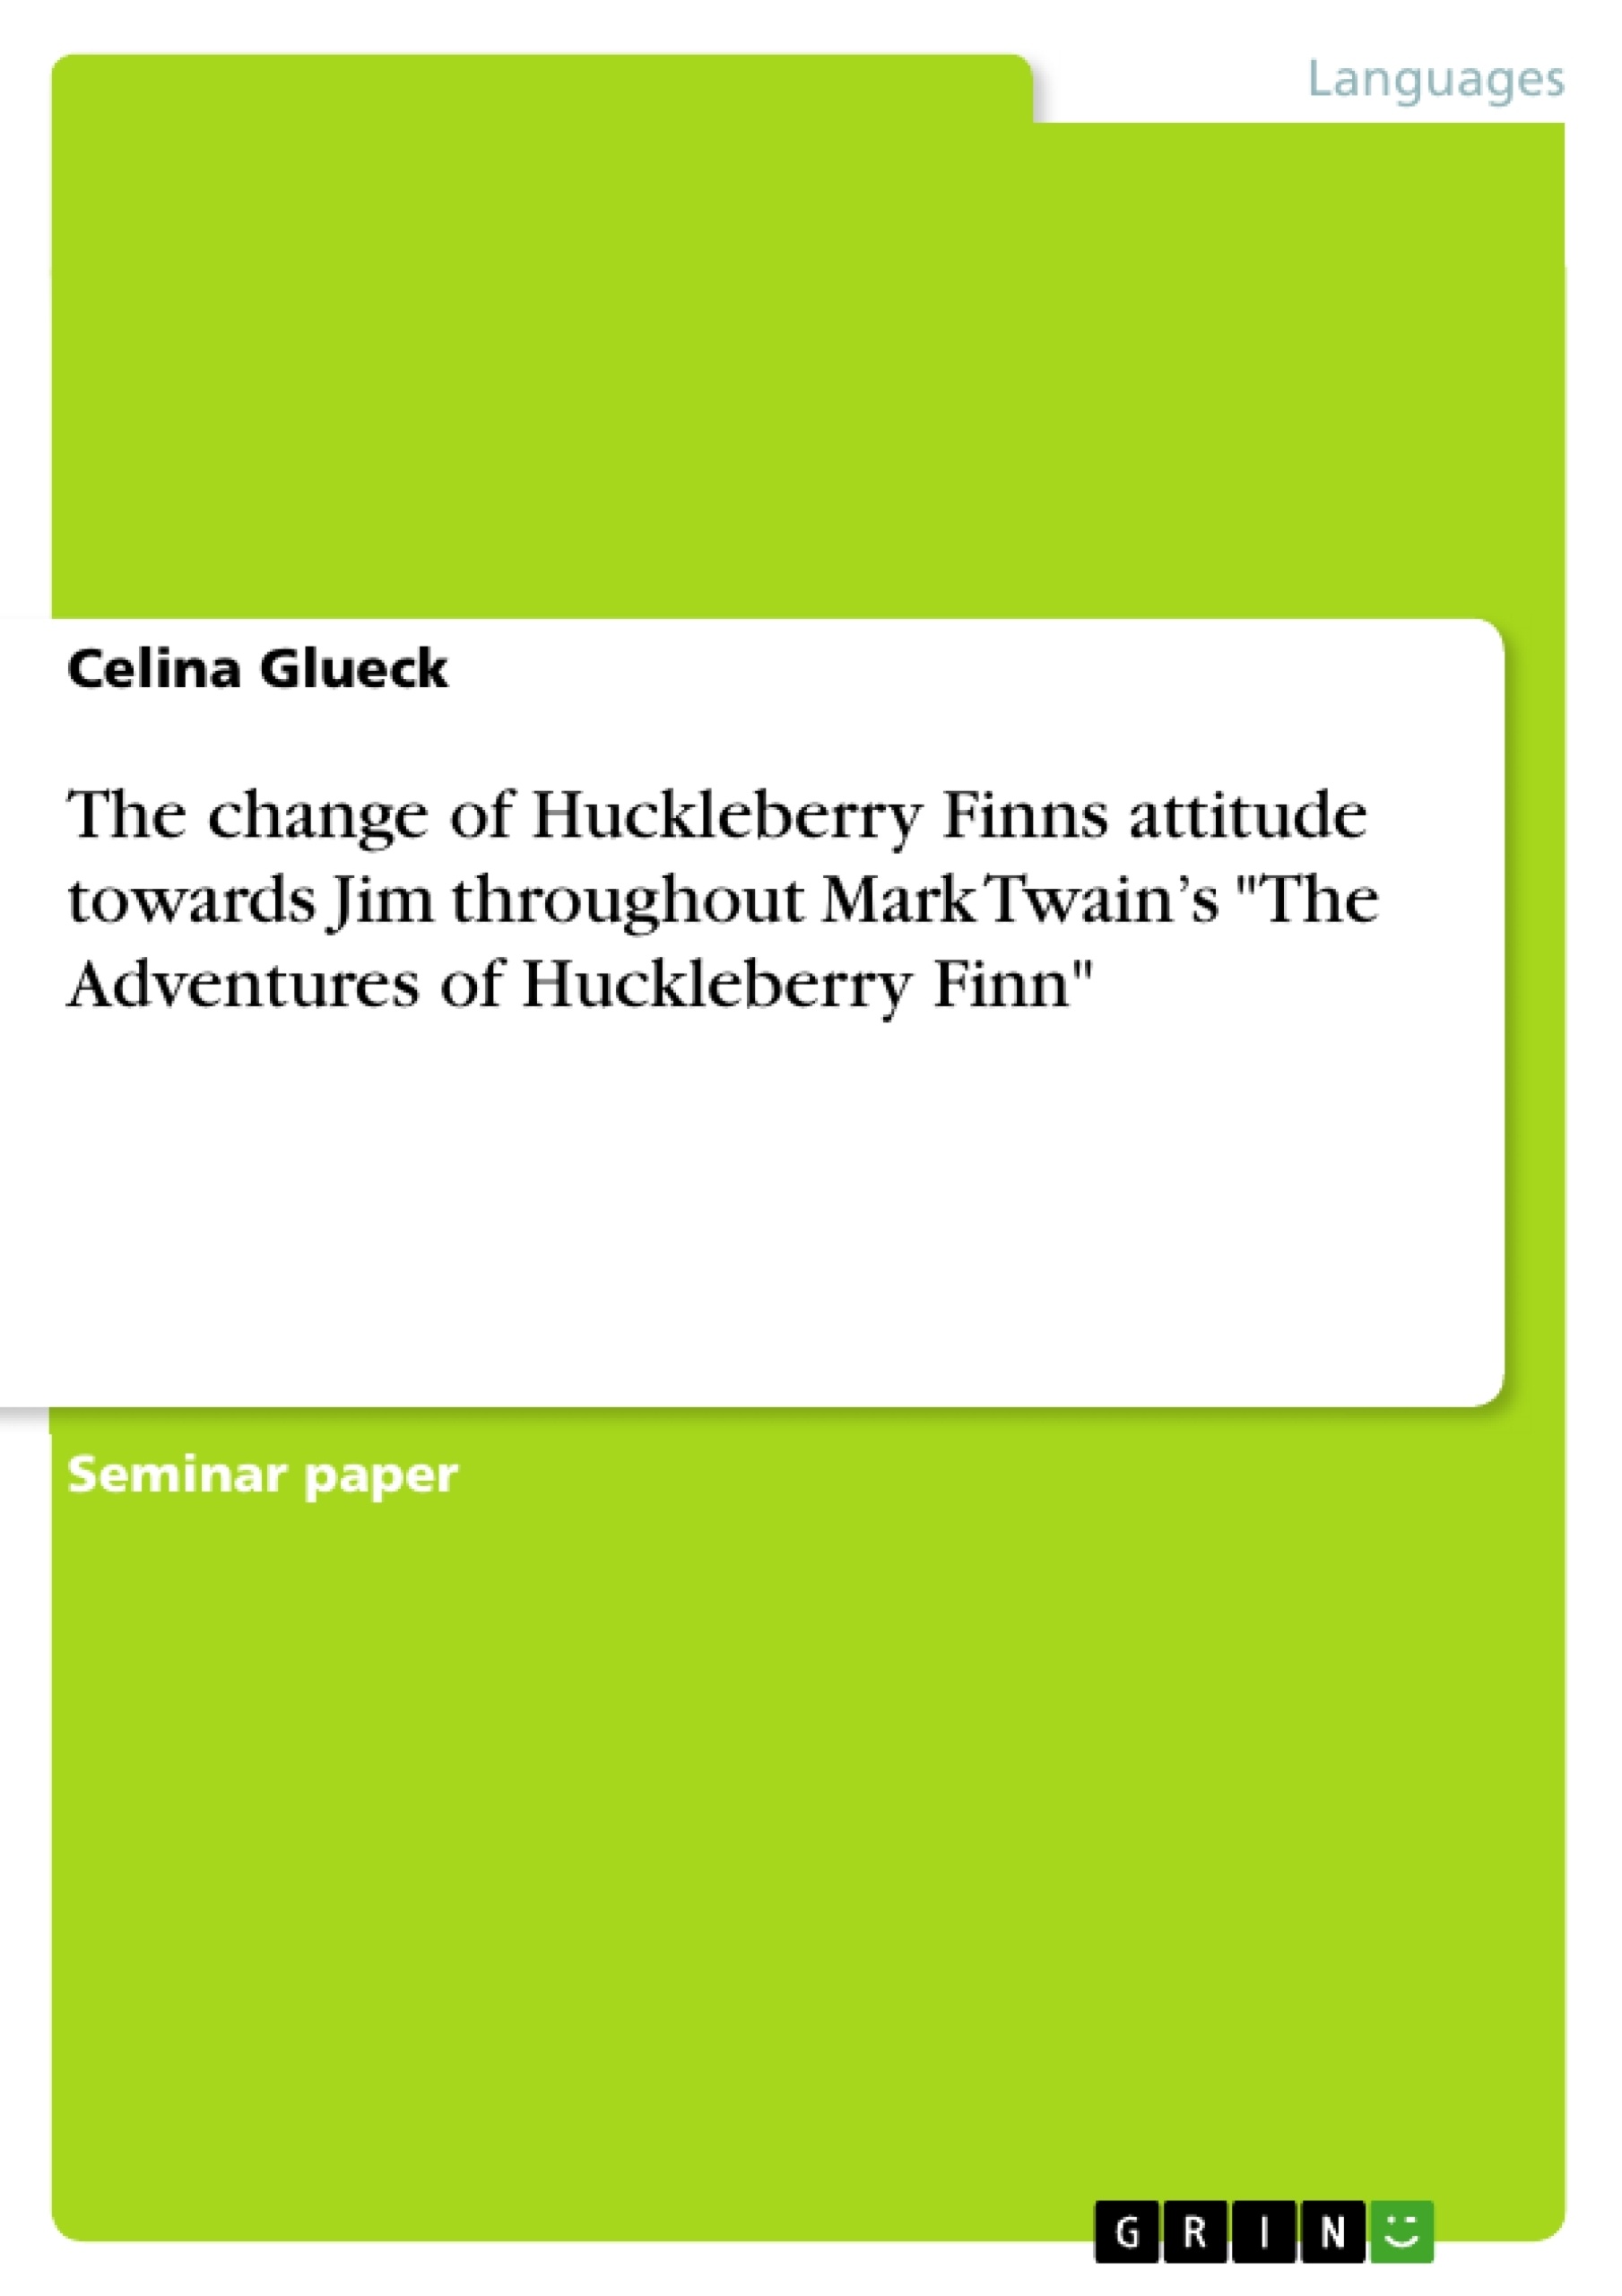 Title: The change of Huckleberry Finns attitude towards Jim throughout Mark Twain’s "The Adventures of
Huckleberry Finn"